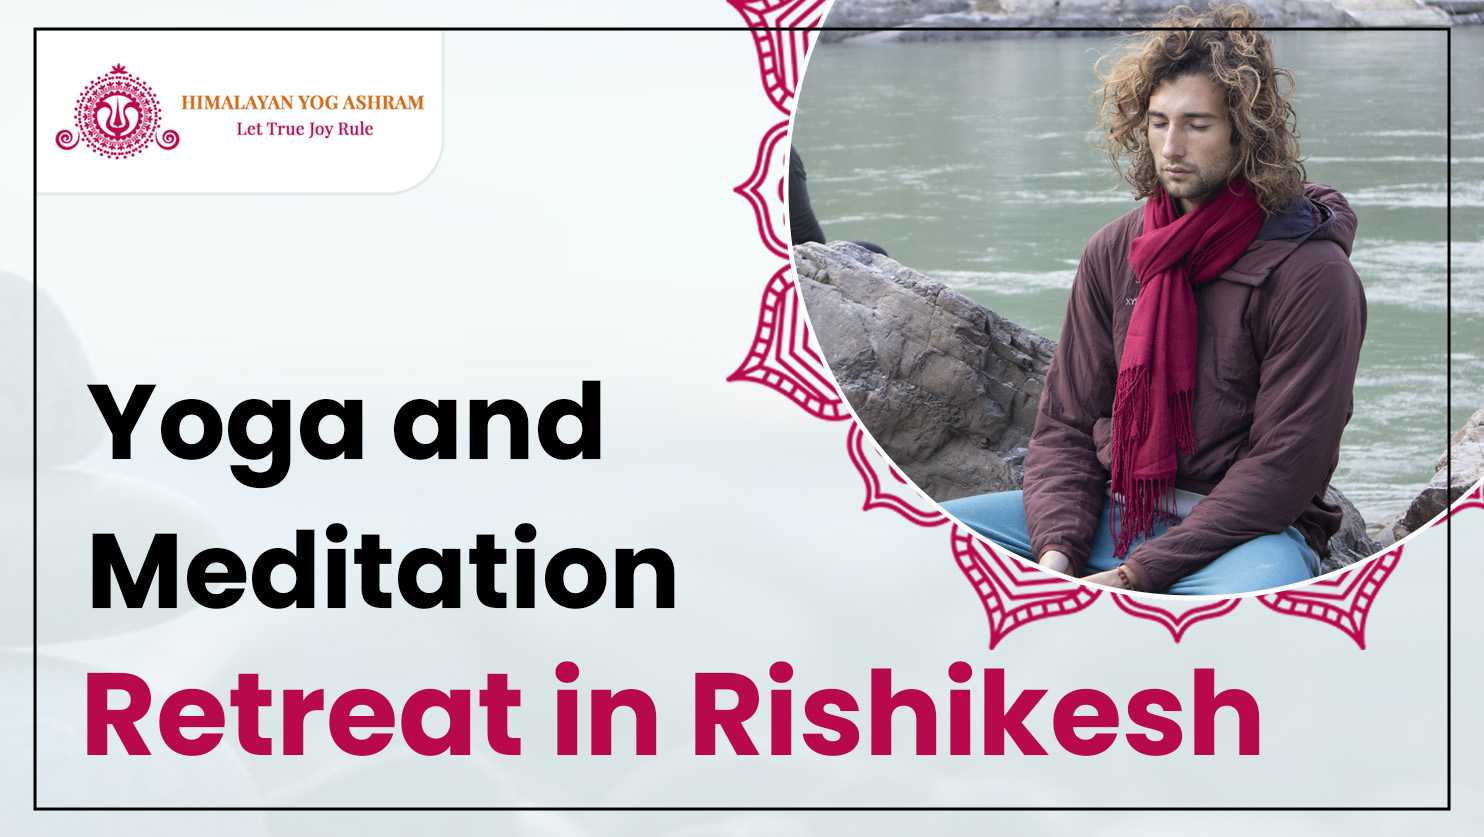 Yoga and Meditation retreat in Rishikesh